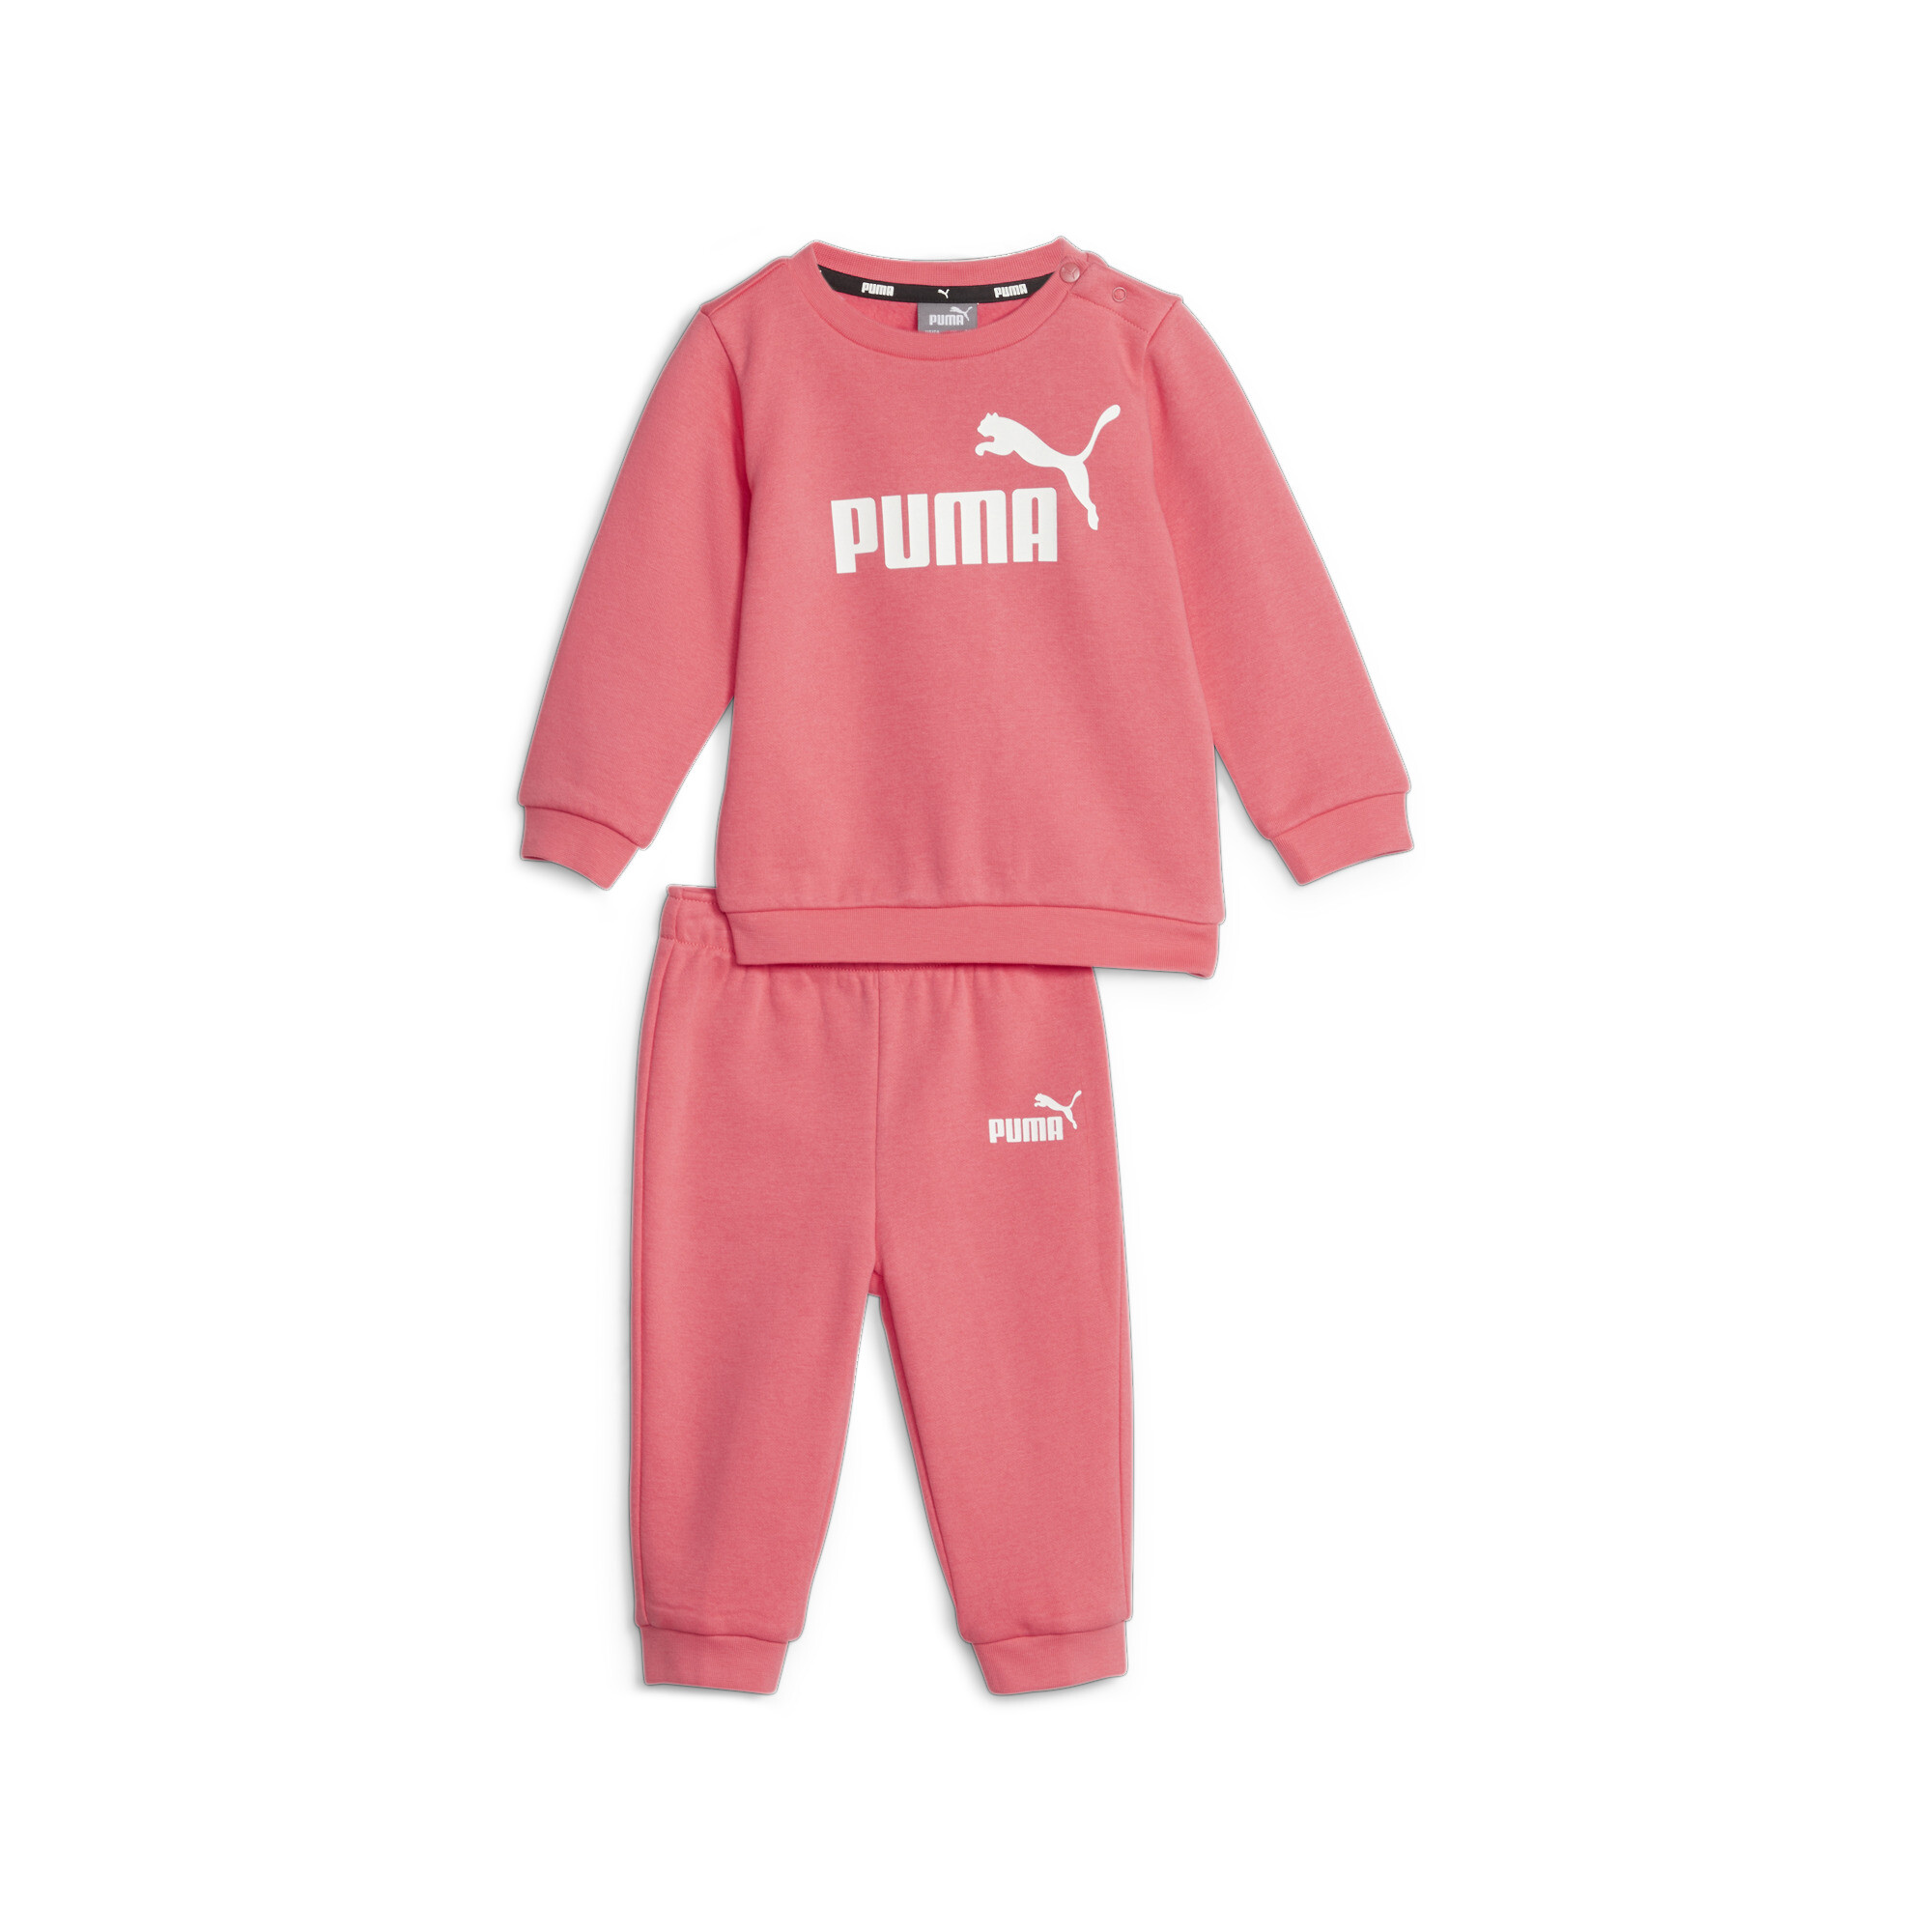 PUMA Essentials Minicats Crew Neck Babies' Jogger Suit In Pink, Size 9-12 Months